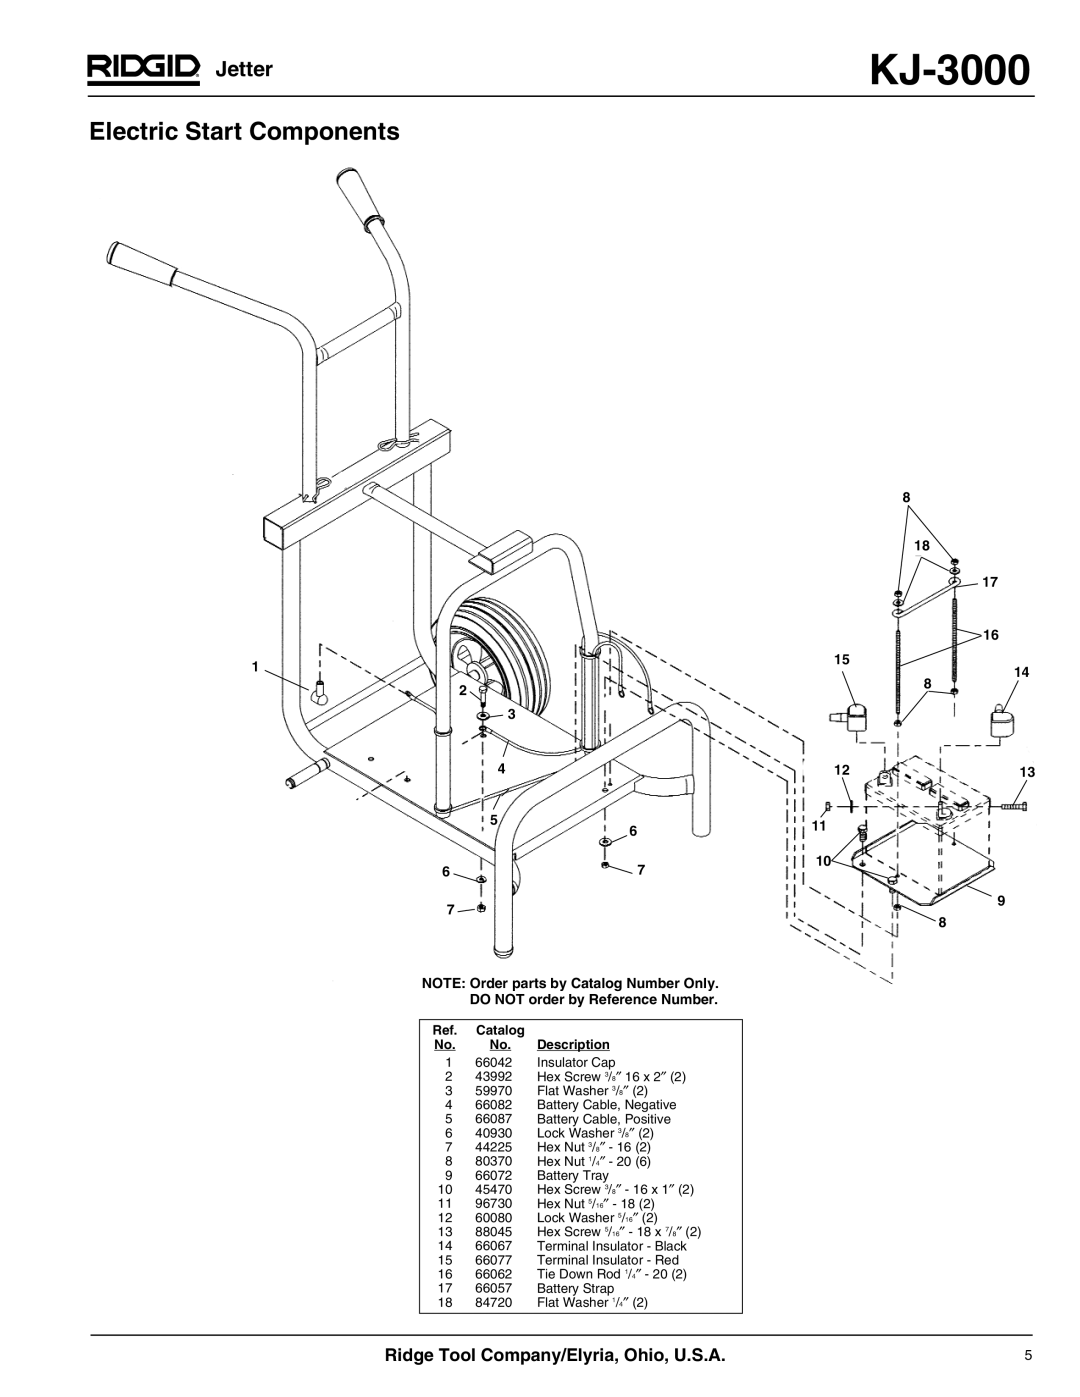 RIDGID KJ-3000 manual Electric Start Components, Jetter, Ridge Tool Company/Elyria, Ohio, U.S.A 